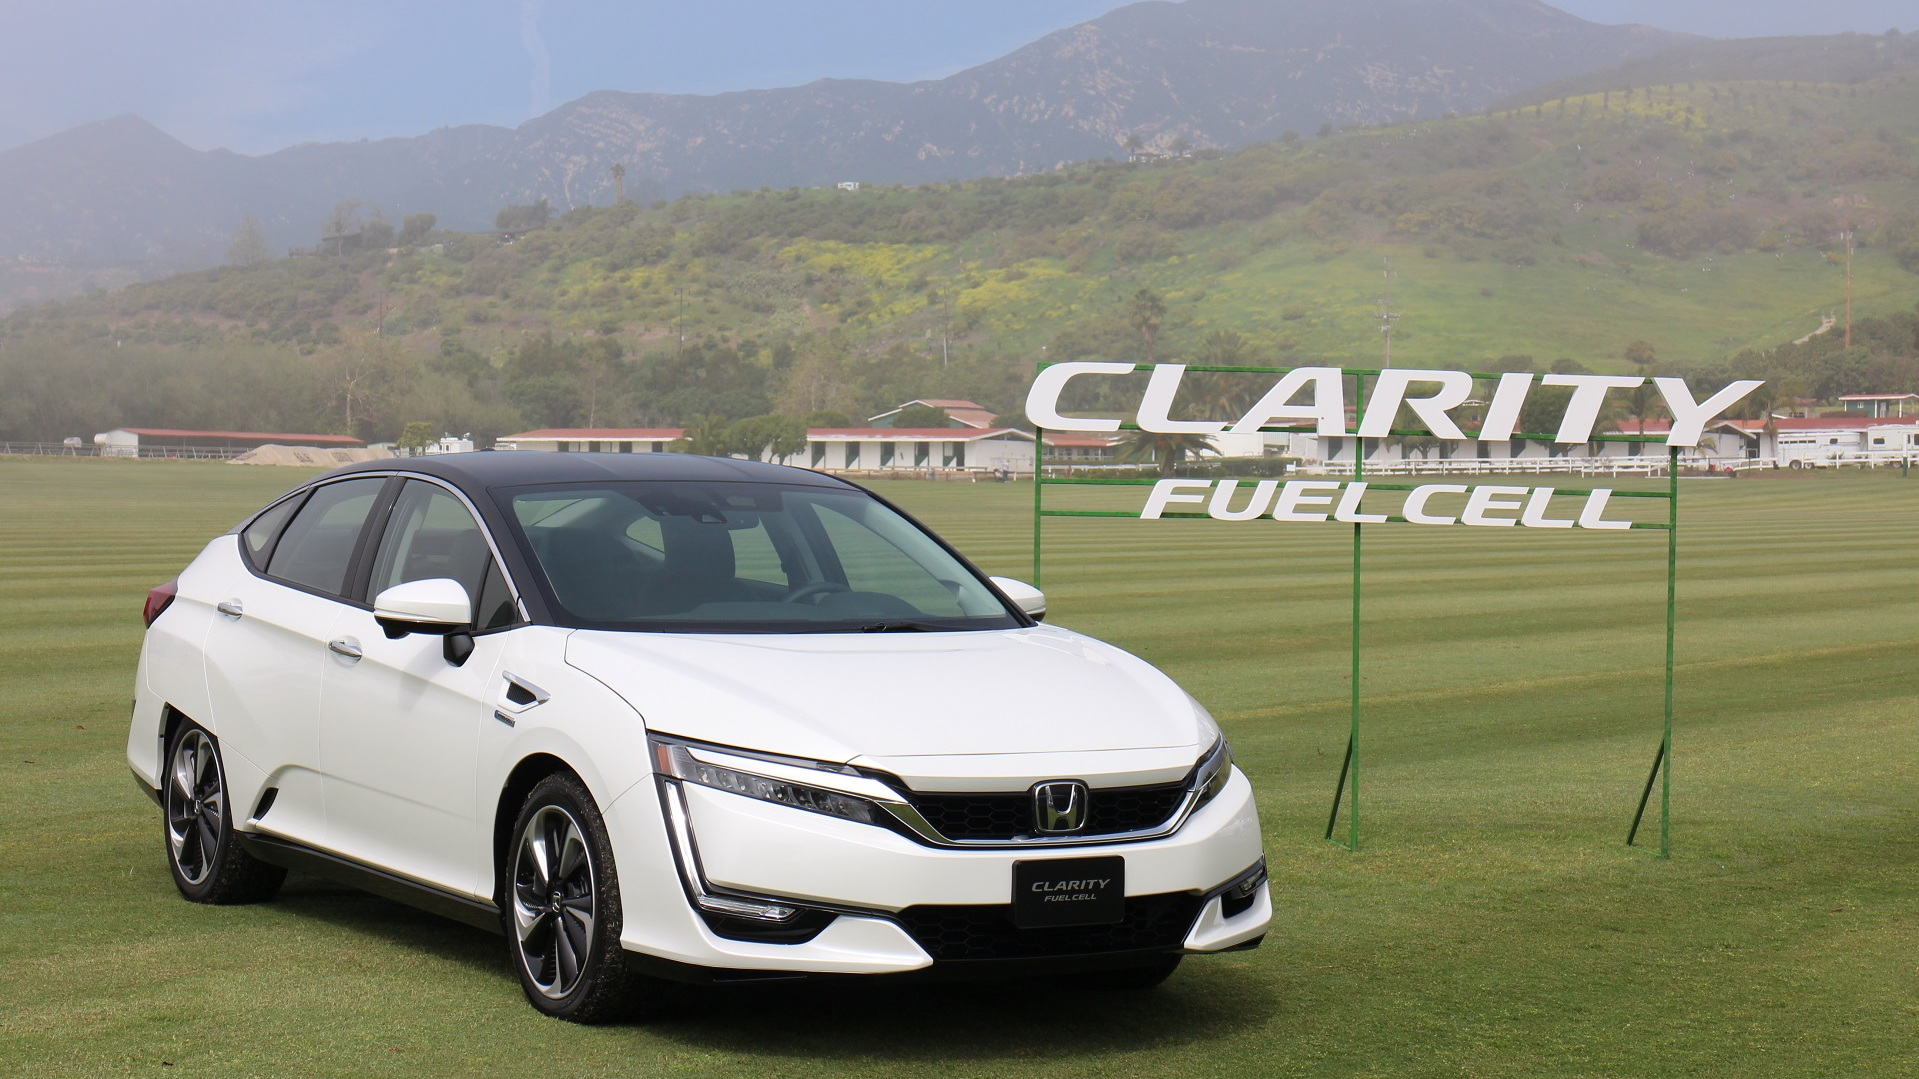 2017 Honda Clarity Fuel Cell, Santa Barbara, CA, March 2017